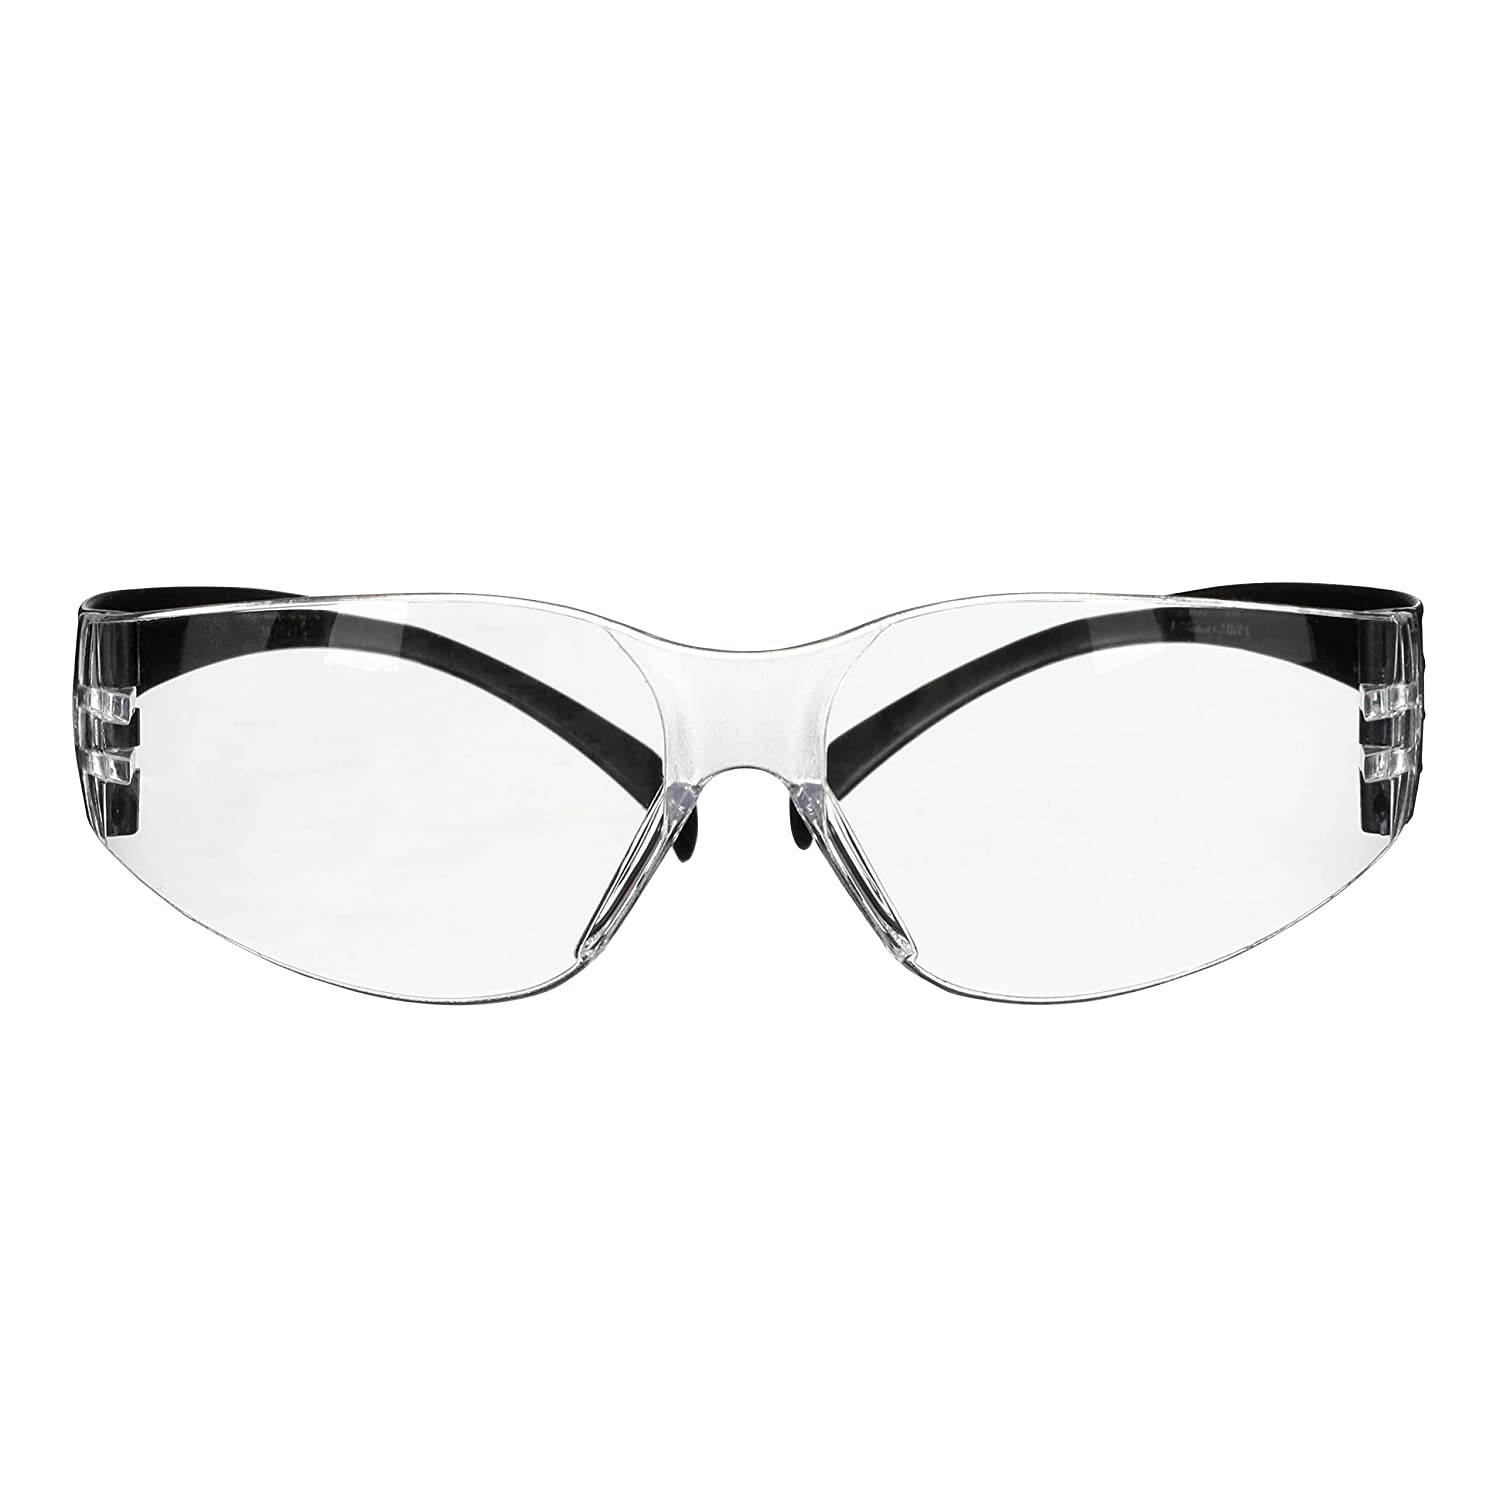 3M SecureFit 100 Series Safety Glasses Anti-Fog/Anti-Scratch Lens Black Temples 20 per Case